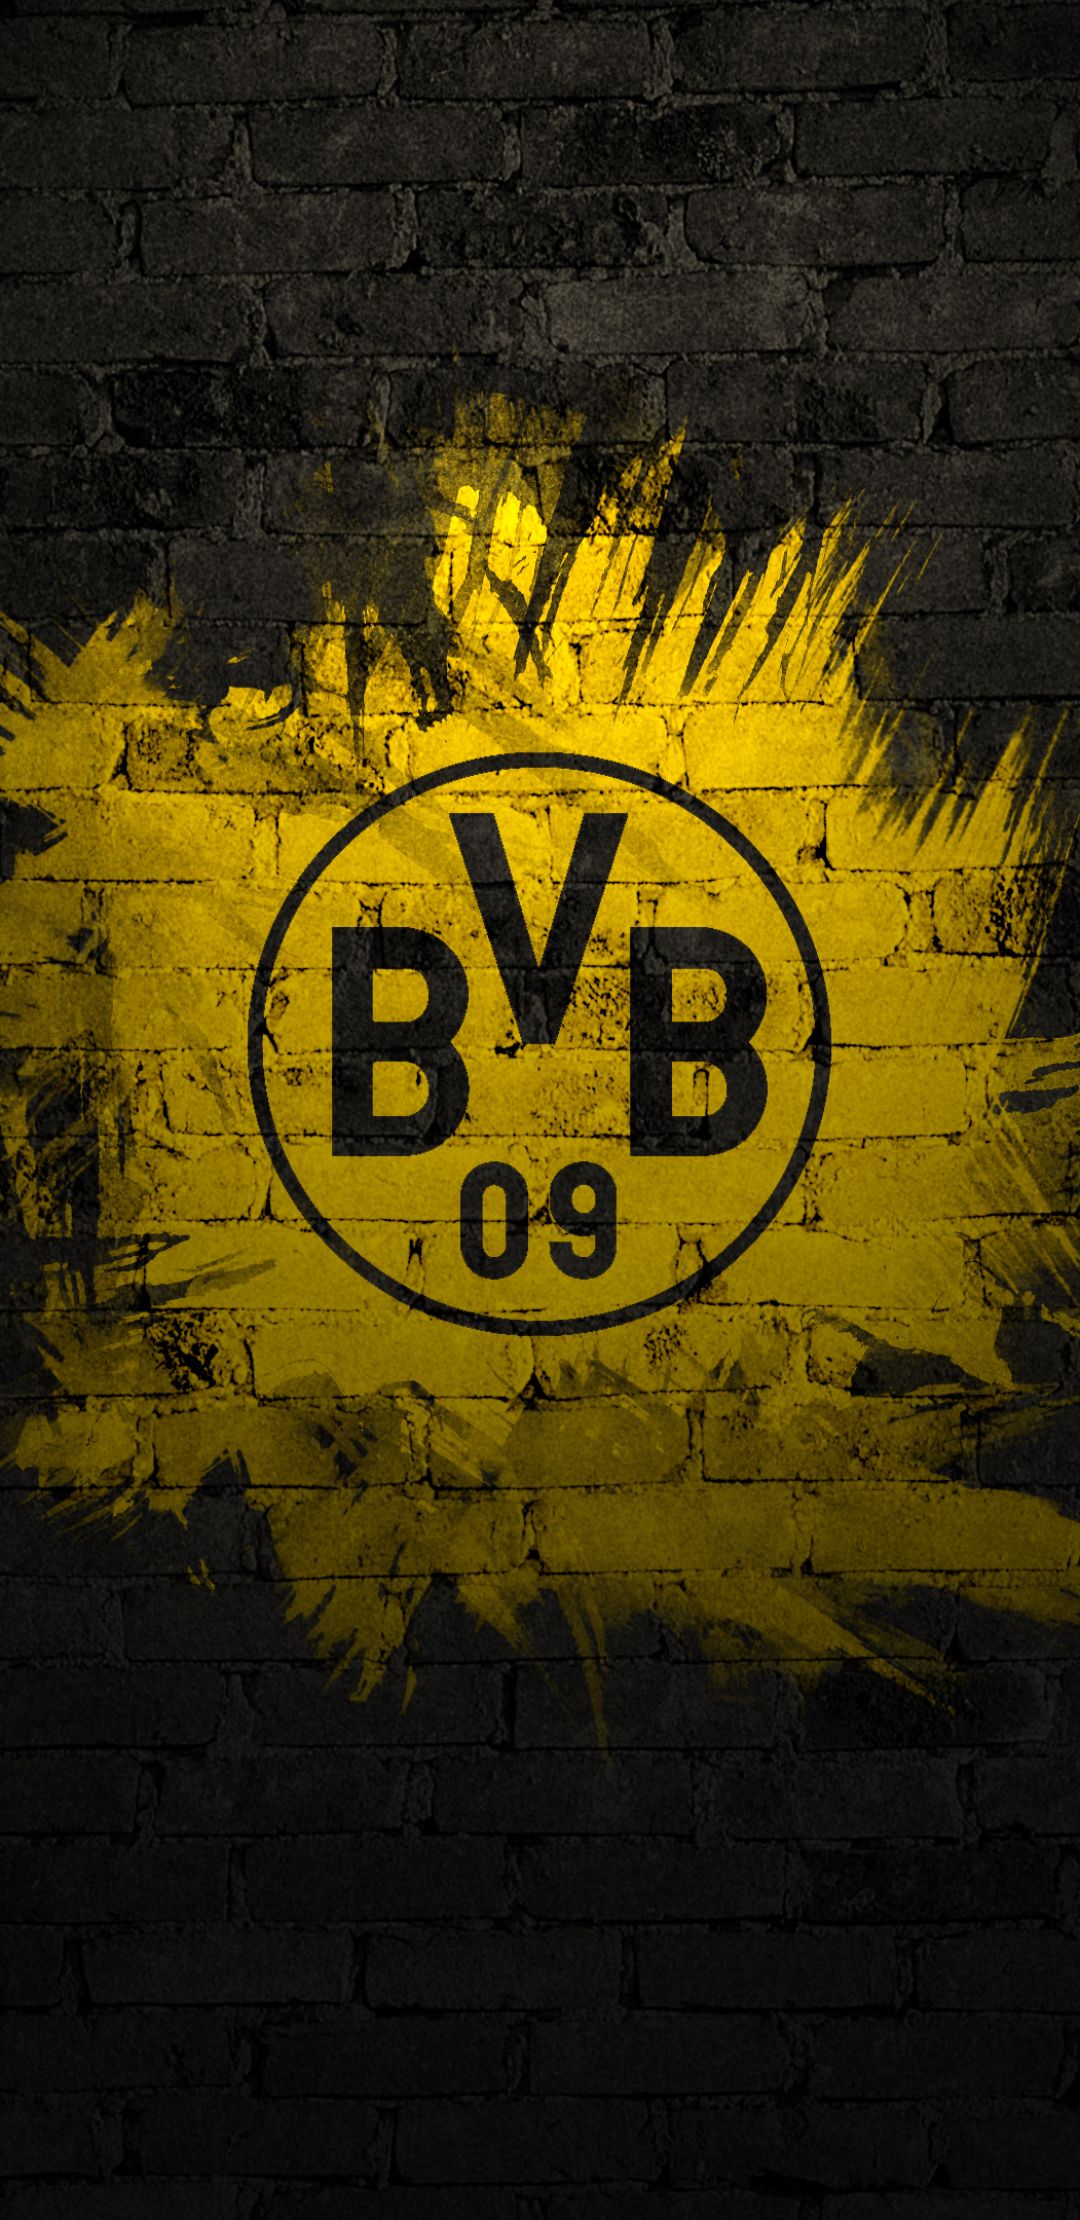 Borussia Dortmund ticket